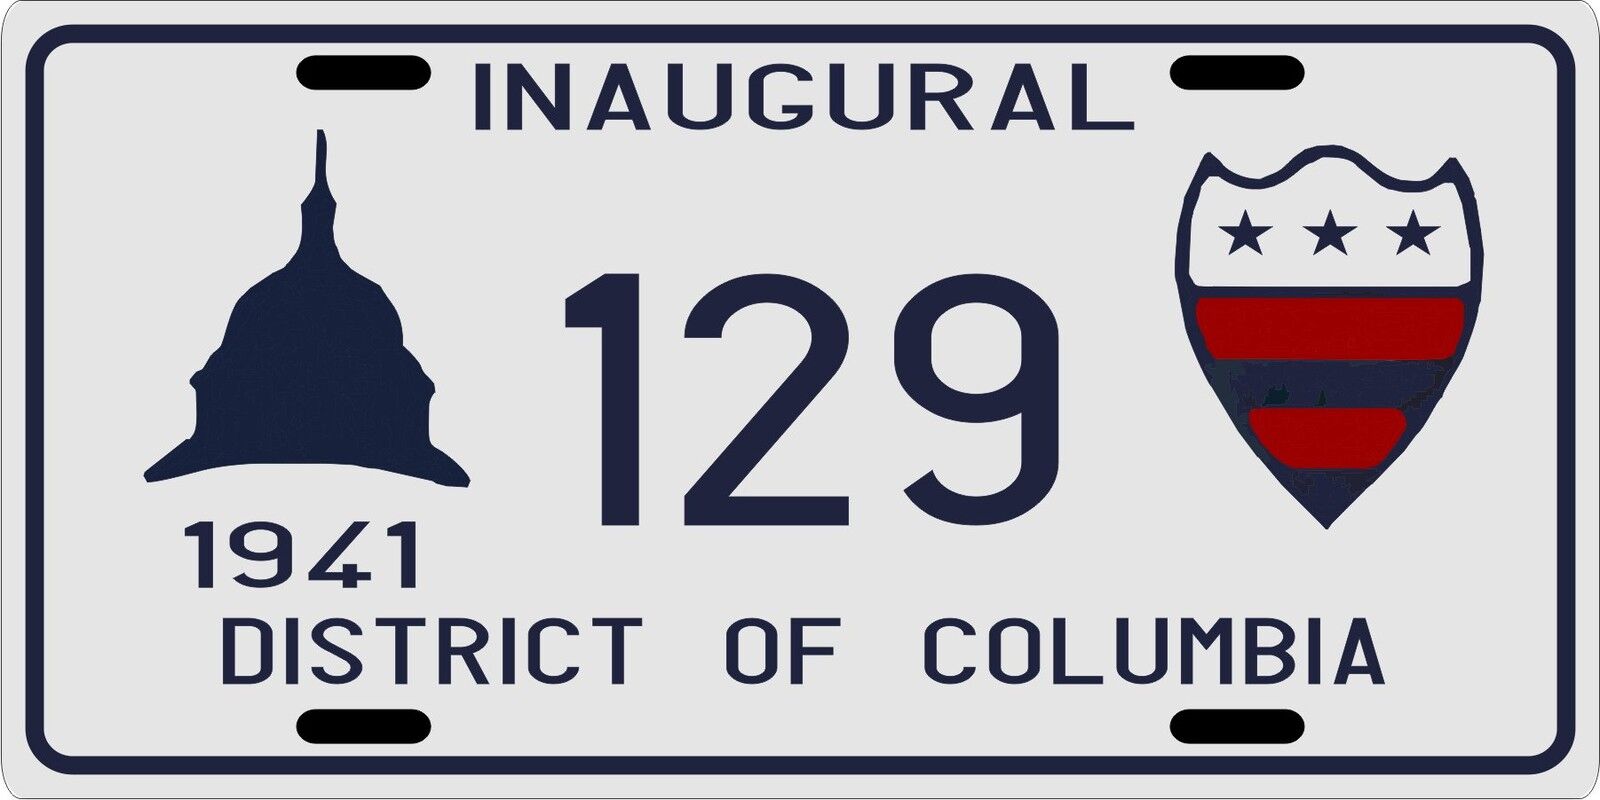 Franklin D. Roosevelt FDR 1941 inauguration Washington DC replica License plate 